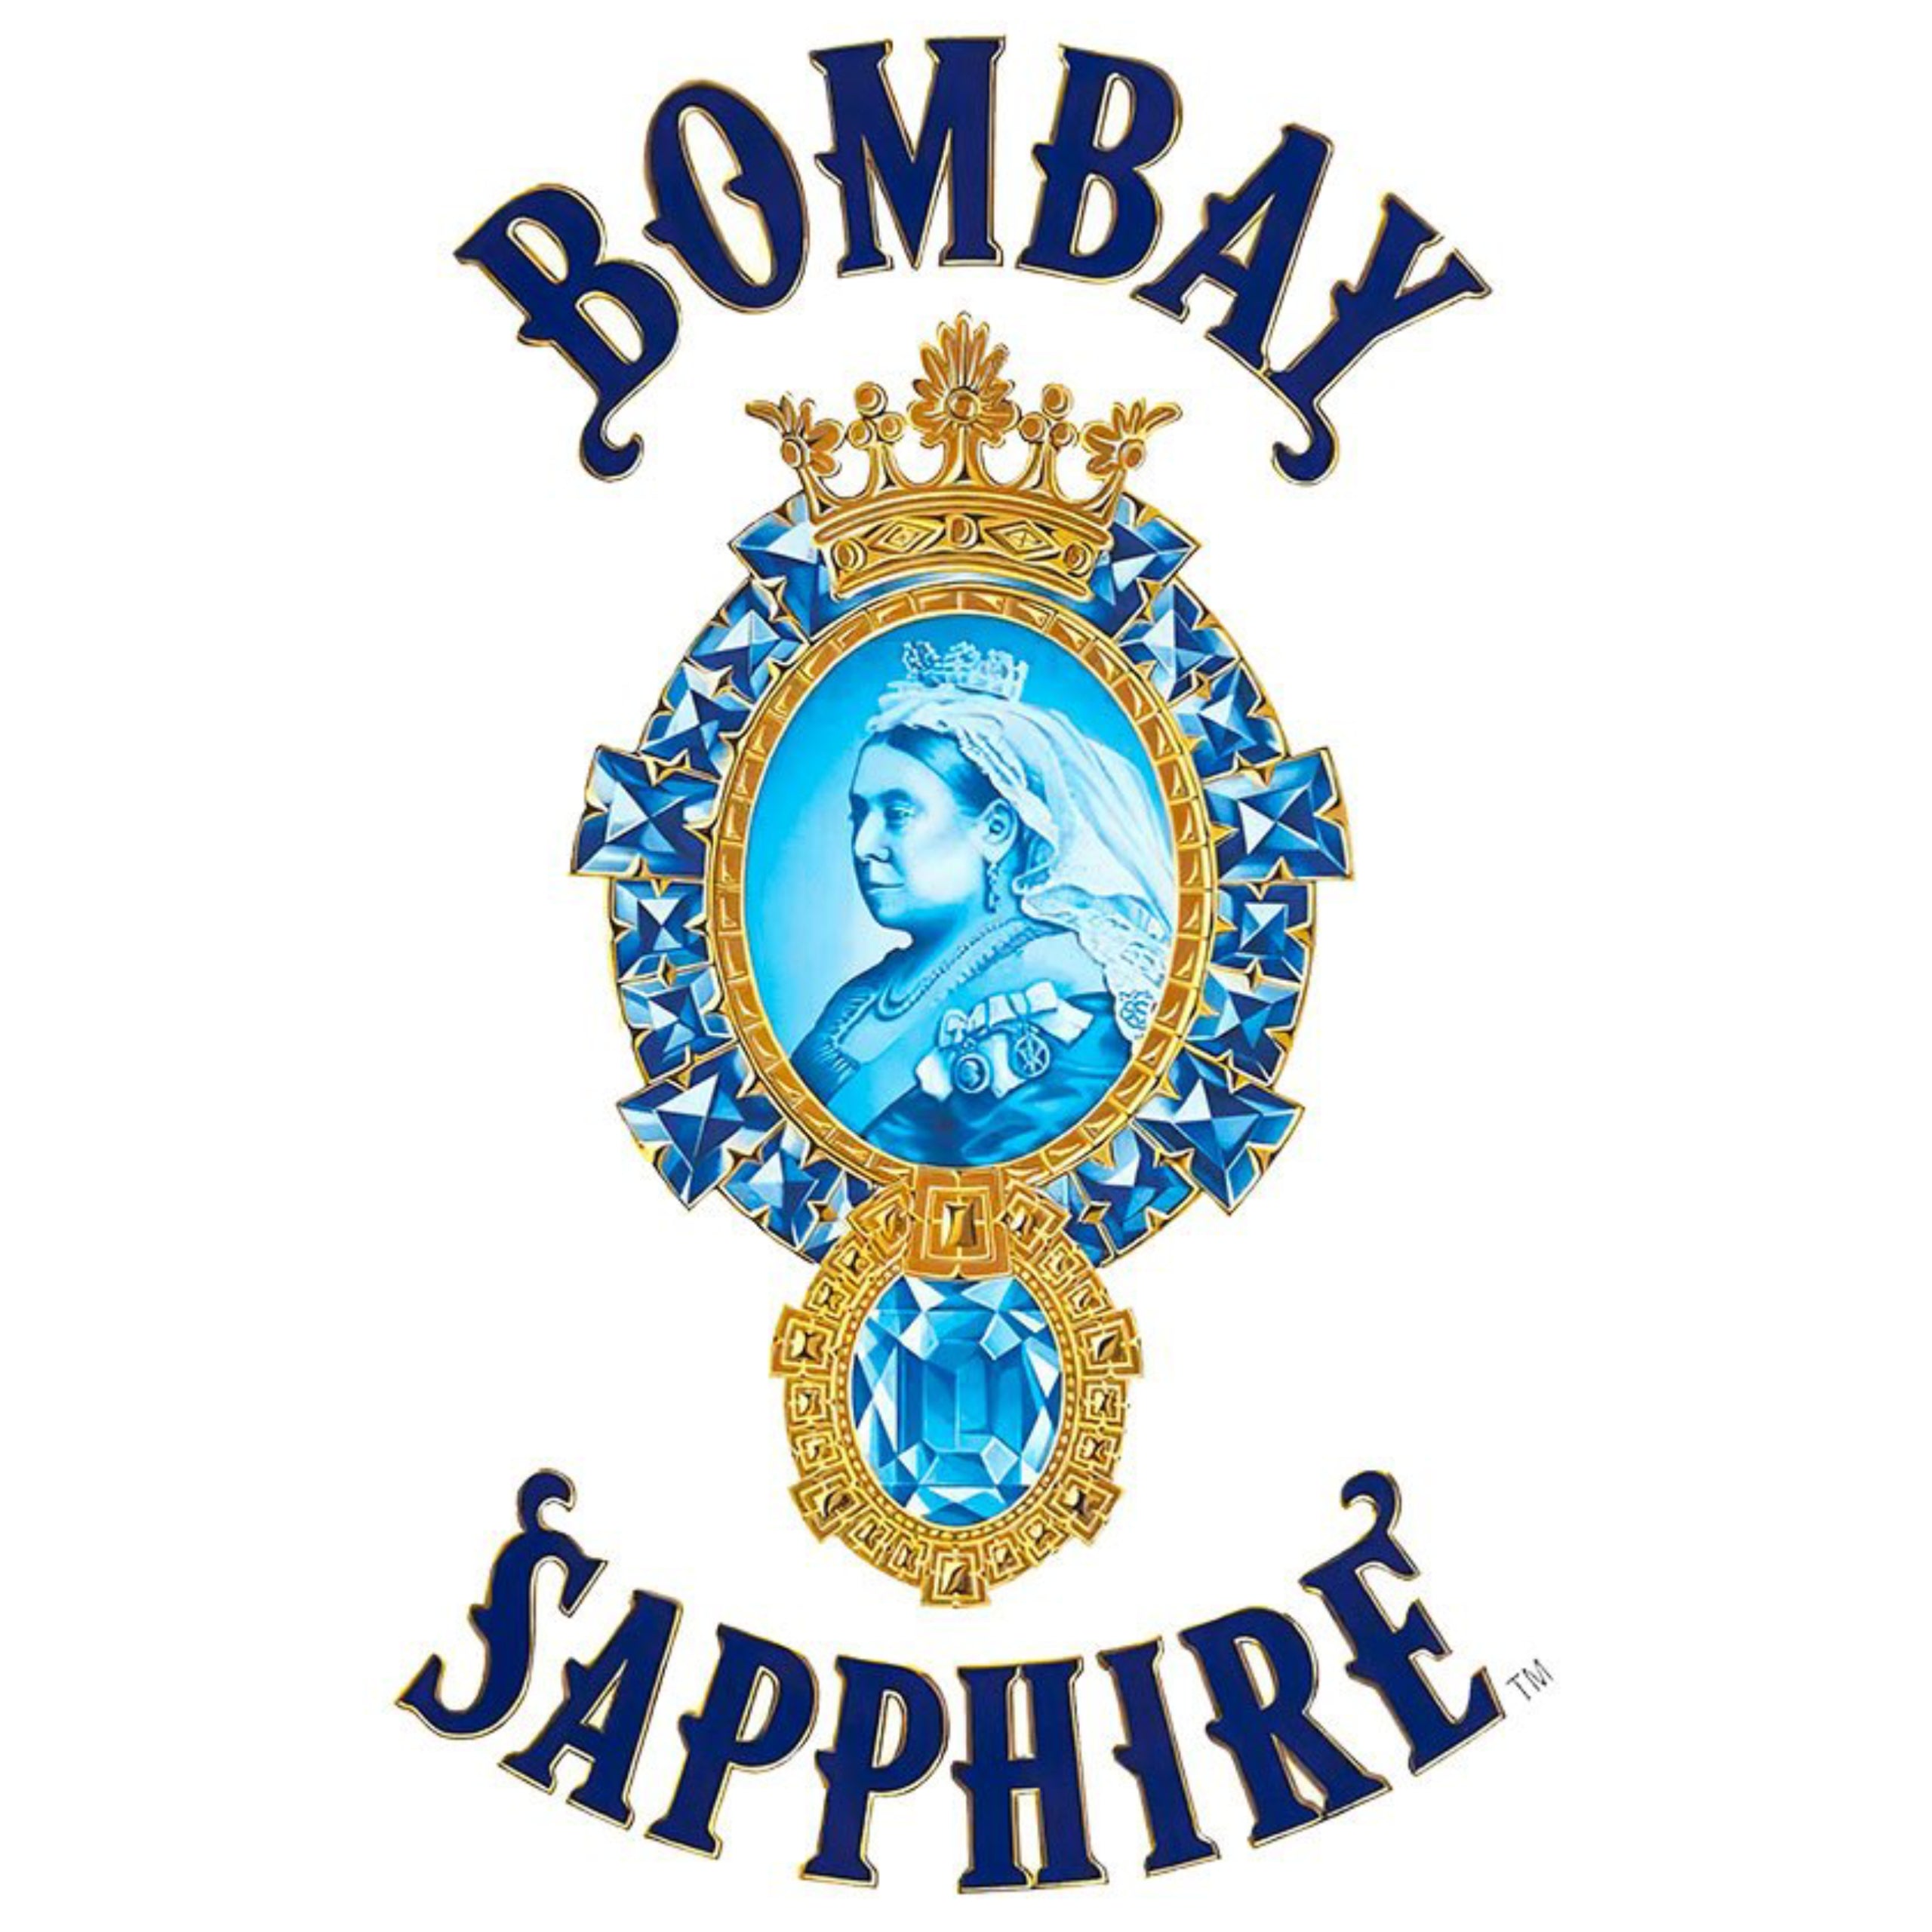 Bombay Sapphire London Dry Gin 1.75Lt